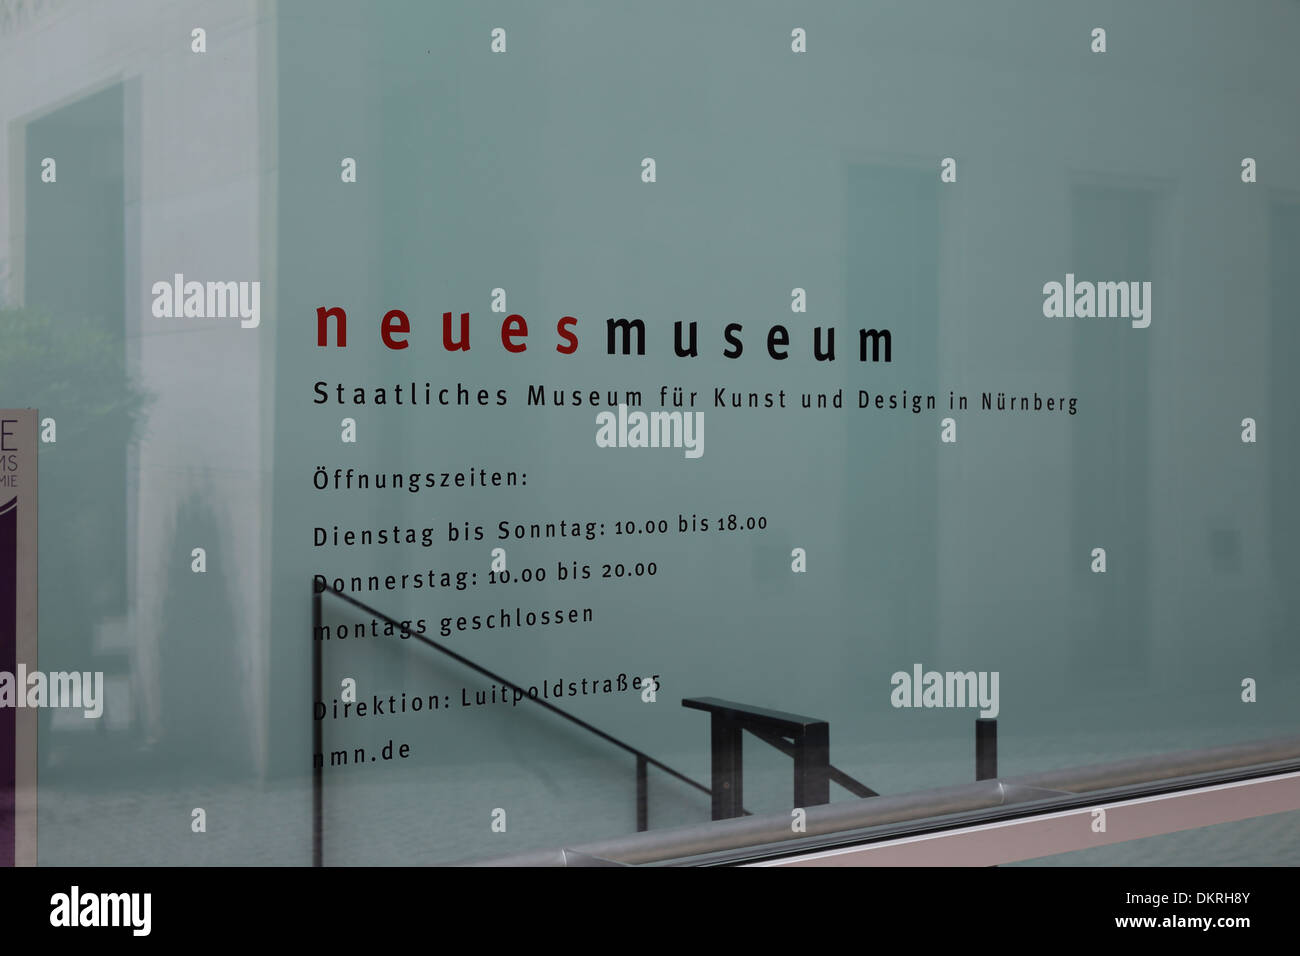 Nürnberg Neues Museum Design und Kunst Stock Photo